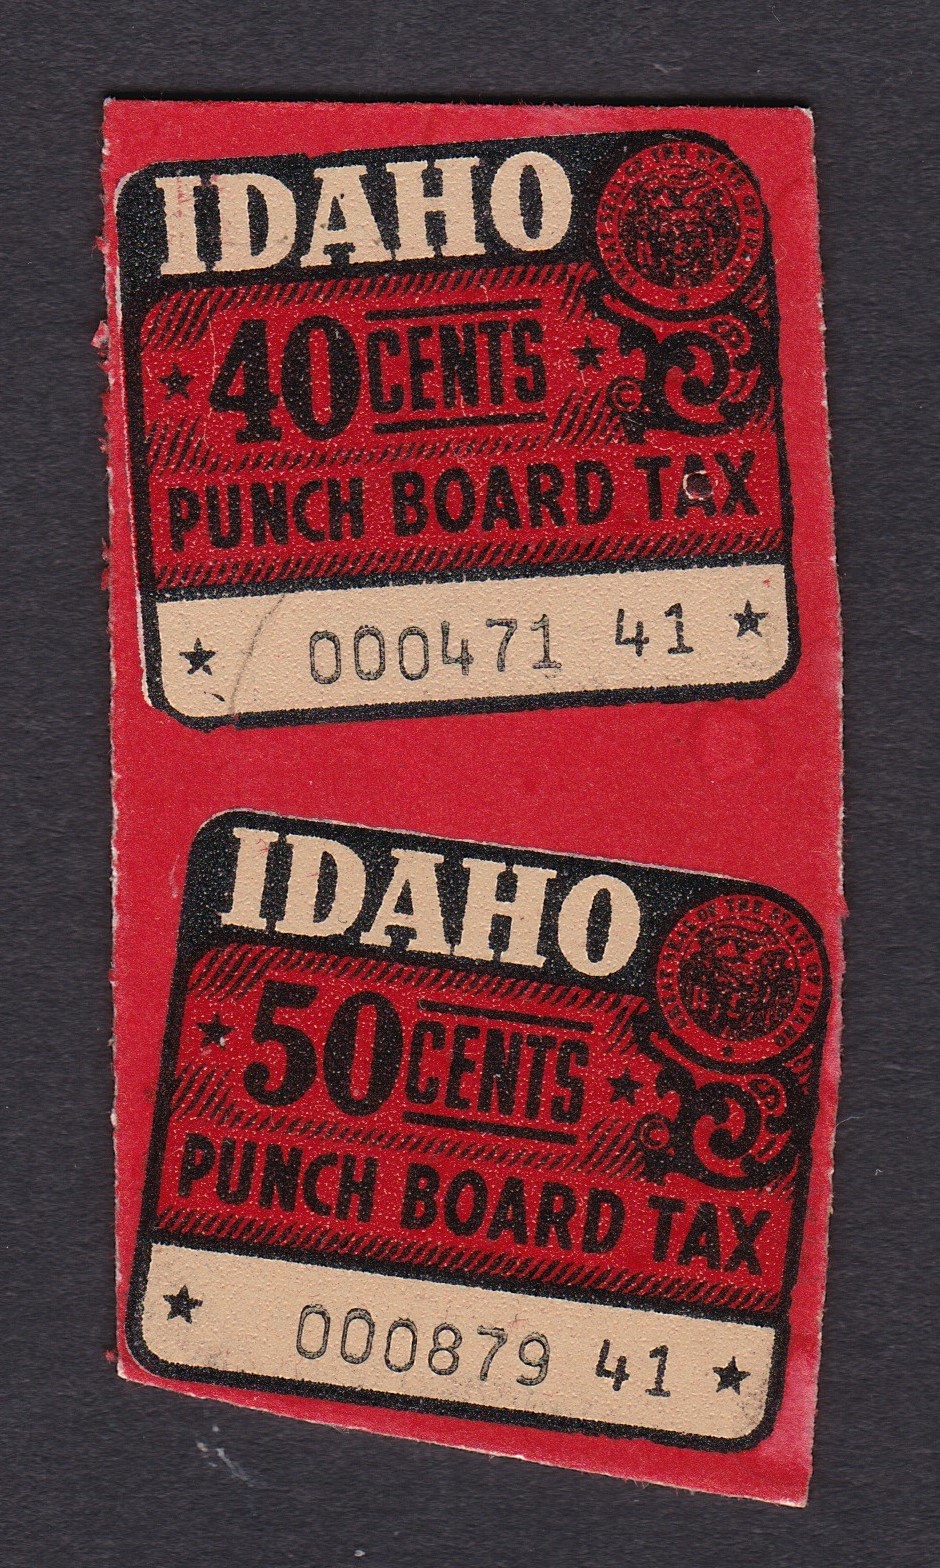 ID punch board PD4, PB5 40c, 50c U VF, both on same card P